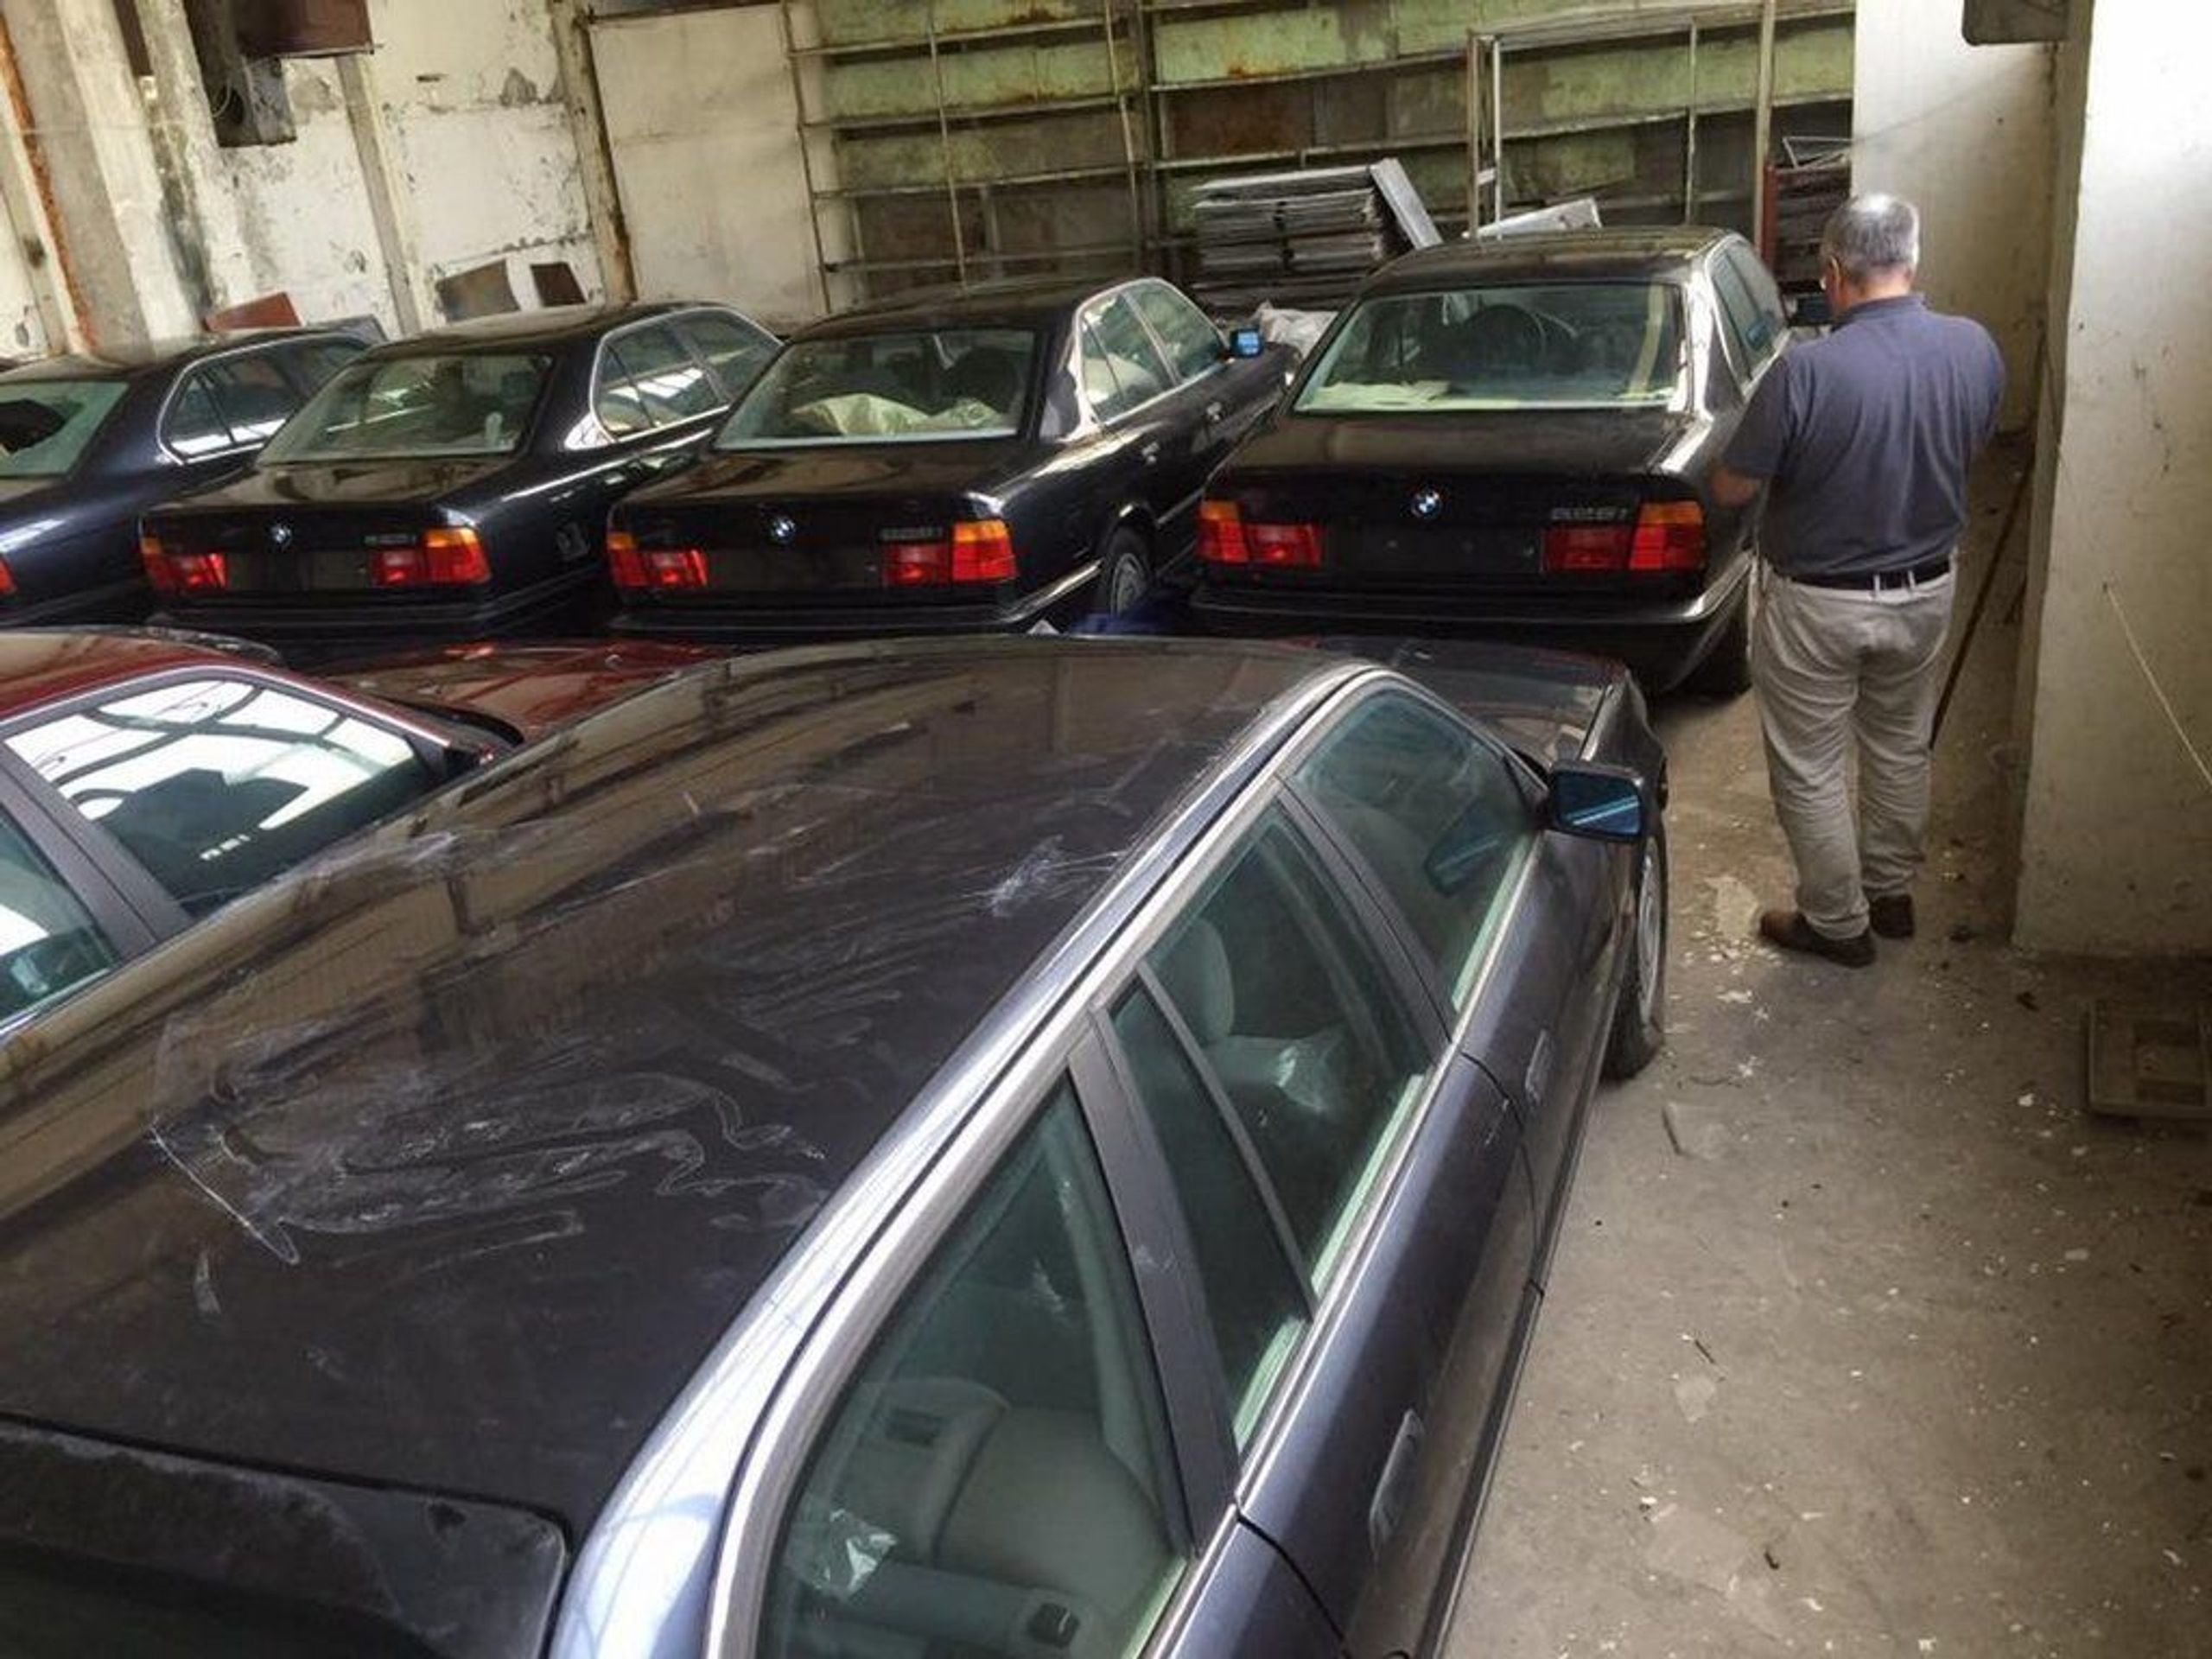 Sklad 25 let ukrýval 11 vozů BMW řady 5 - 29 - Fotogalerie: V bulharském skladu se 25 let skrýval poklad (7/16)